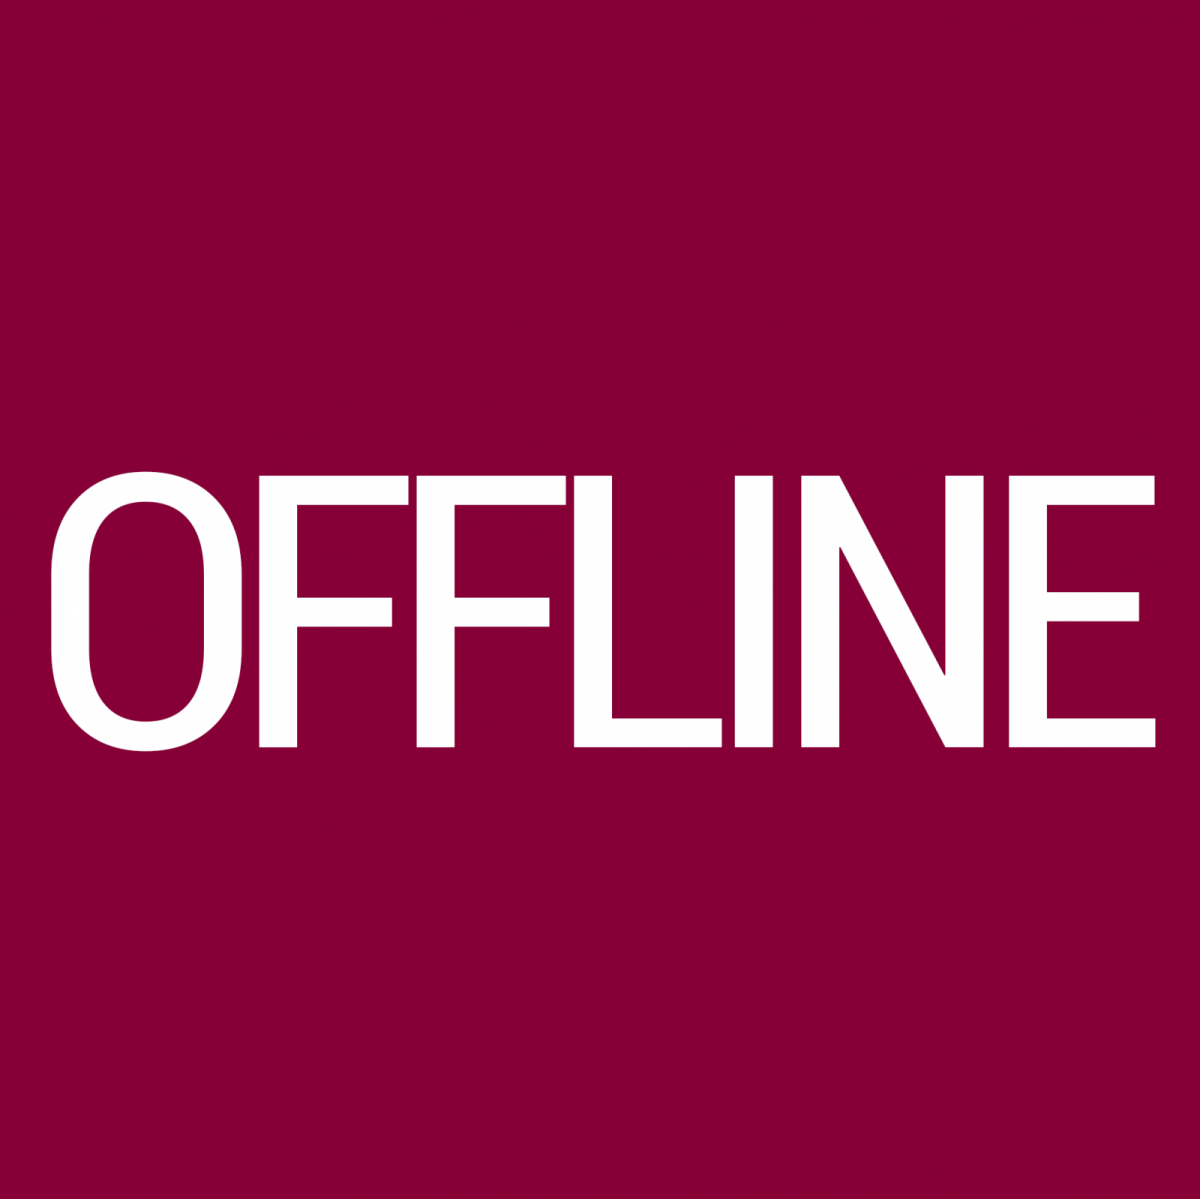 Offline name. Офлайн. Логотип offline. Надпись оффлайн. Offline логотип офлайн.